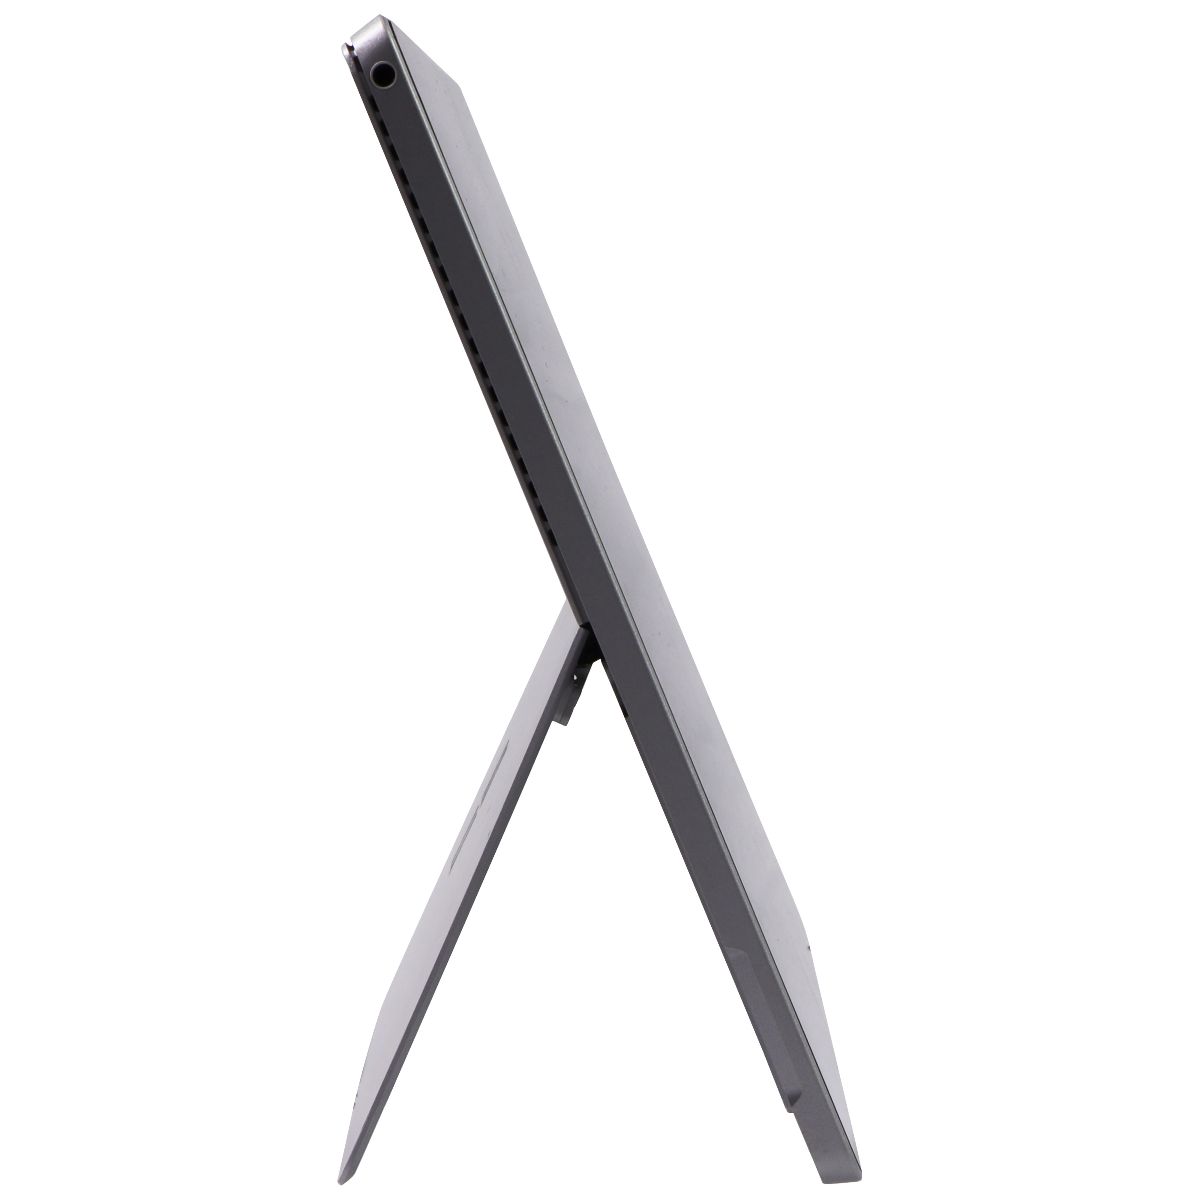 Microsoft Surface Pro 4 (12.3) Tablet (1724) i5-6300U/256GB/4GB/10 Pro - Silver Laptops - PC Laptops & Netbooks Microsoft    - Simple Cell Bulk Wholesale Pricing - USA Seller